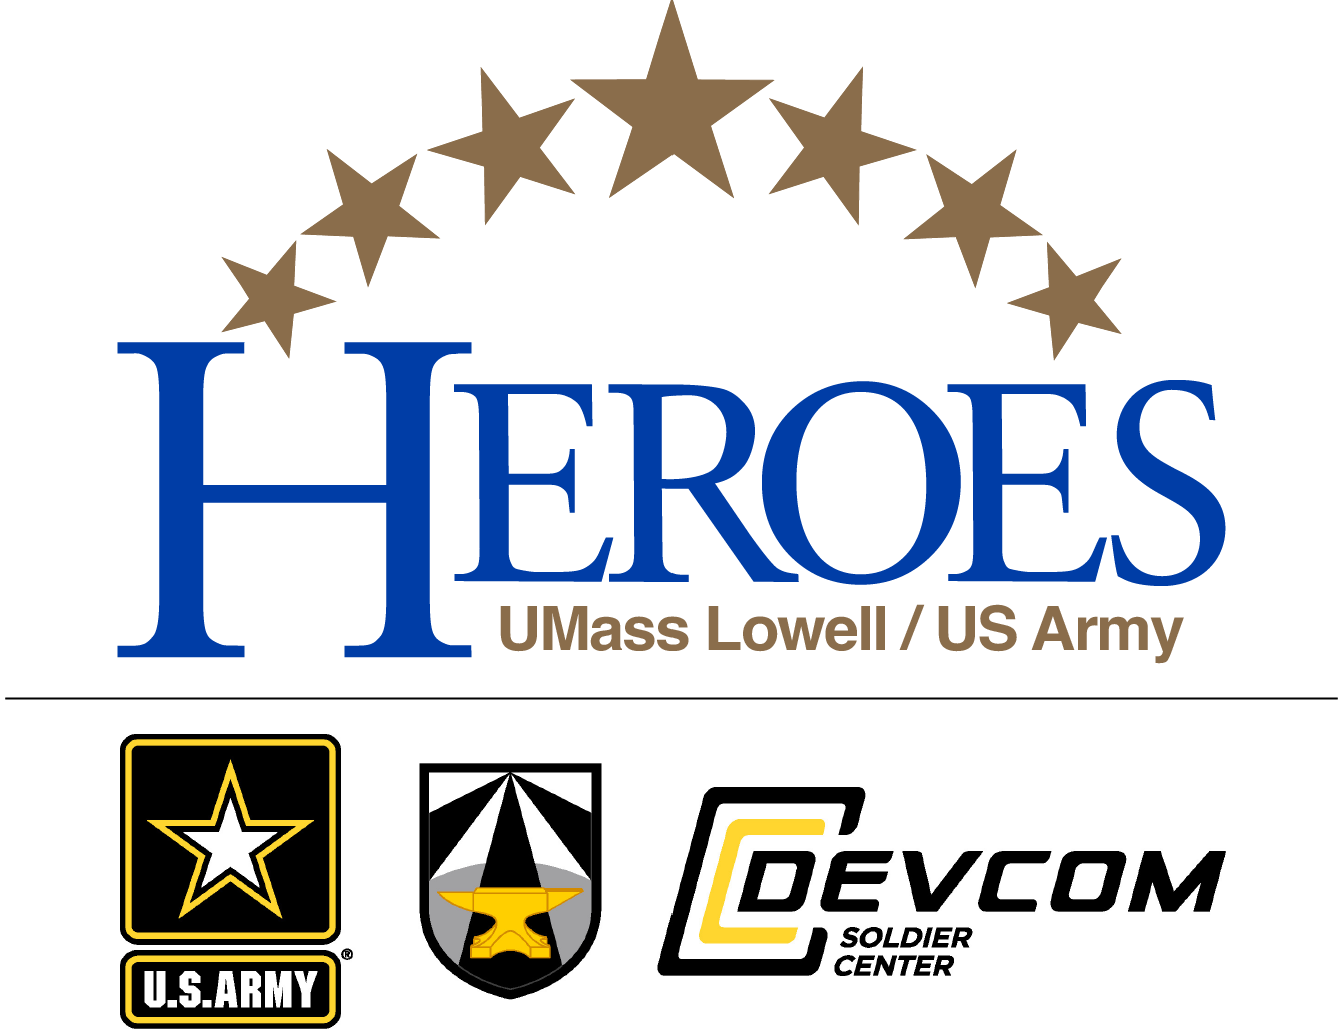 HEROES and DEVCOM logo